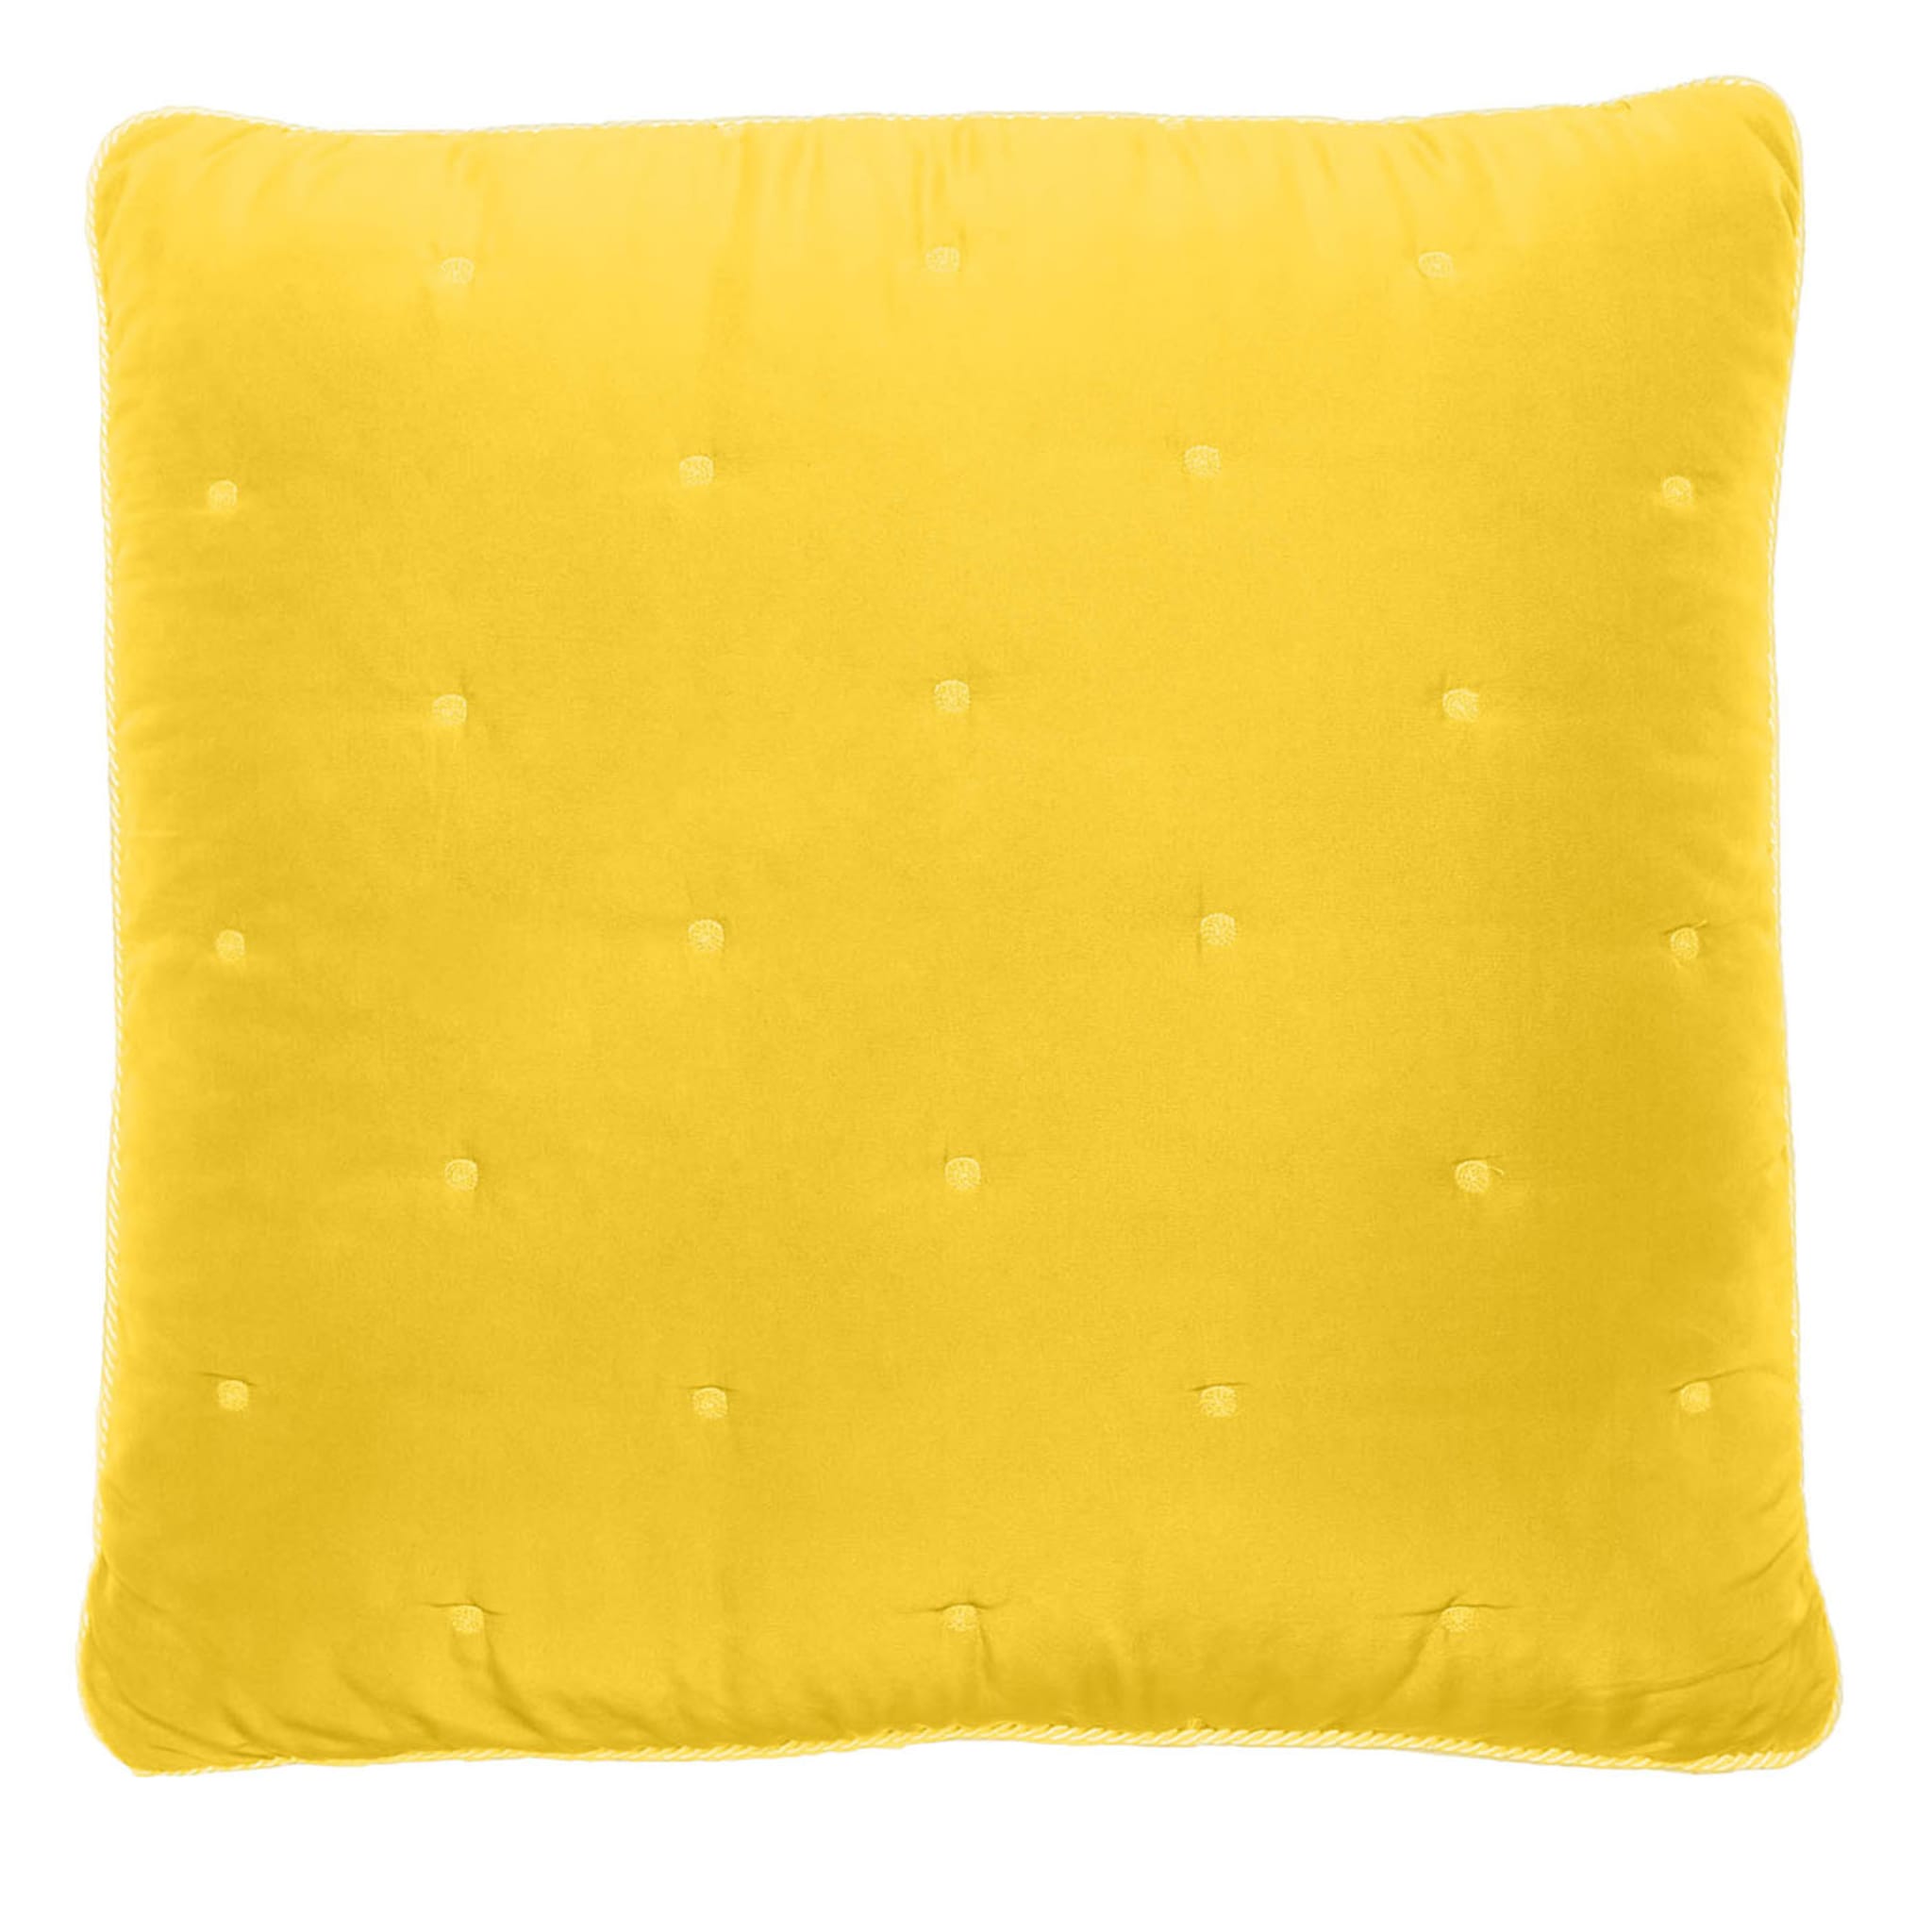 Pijama Party Yellow Decorative Cushion - Main view